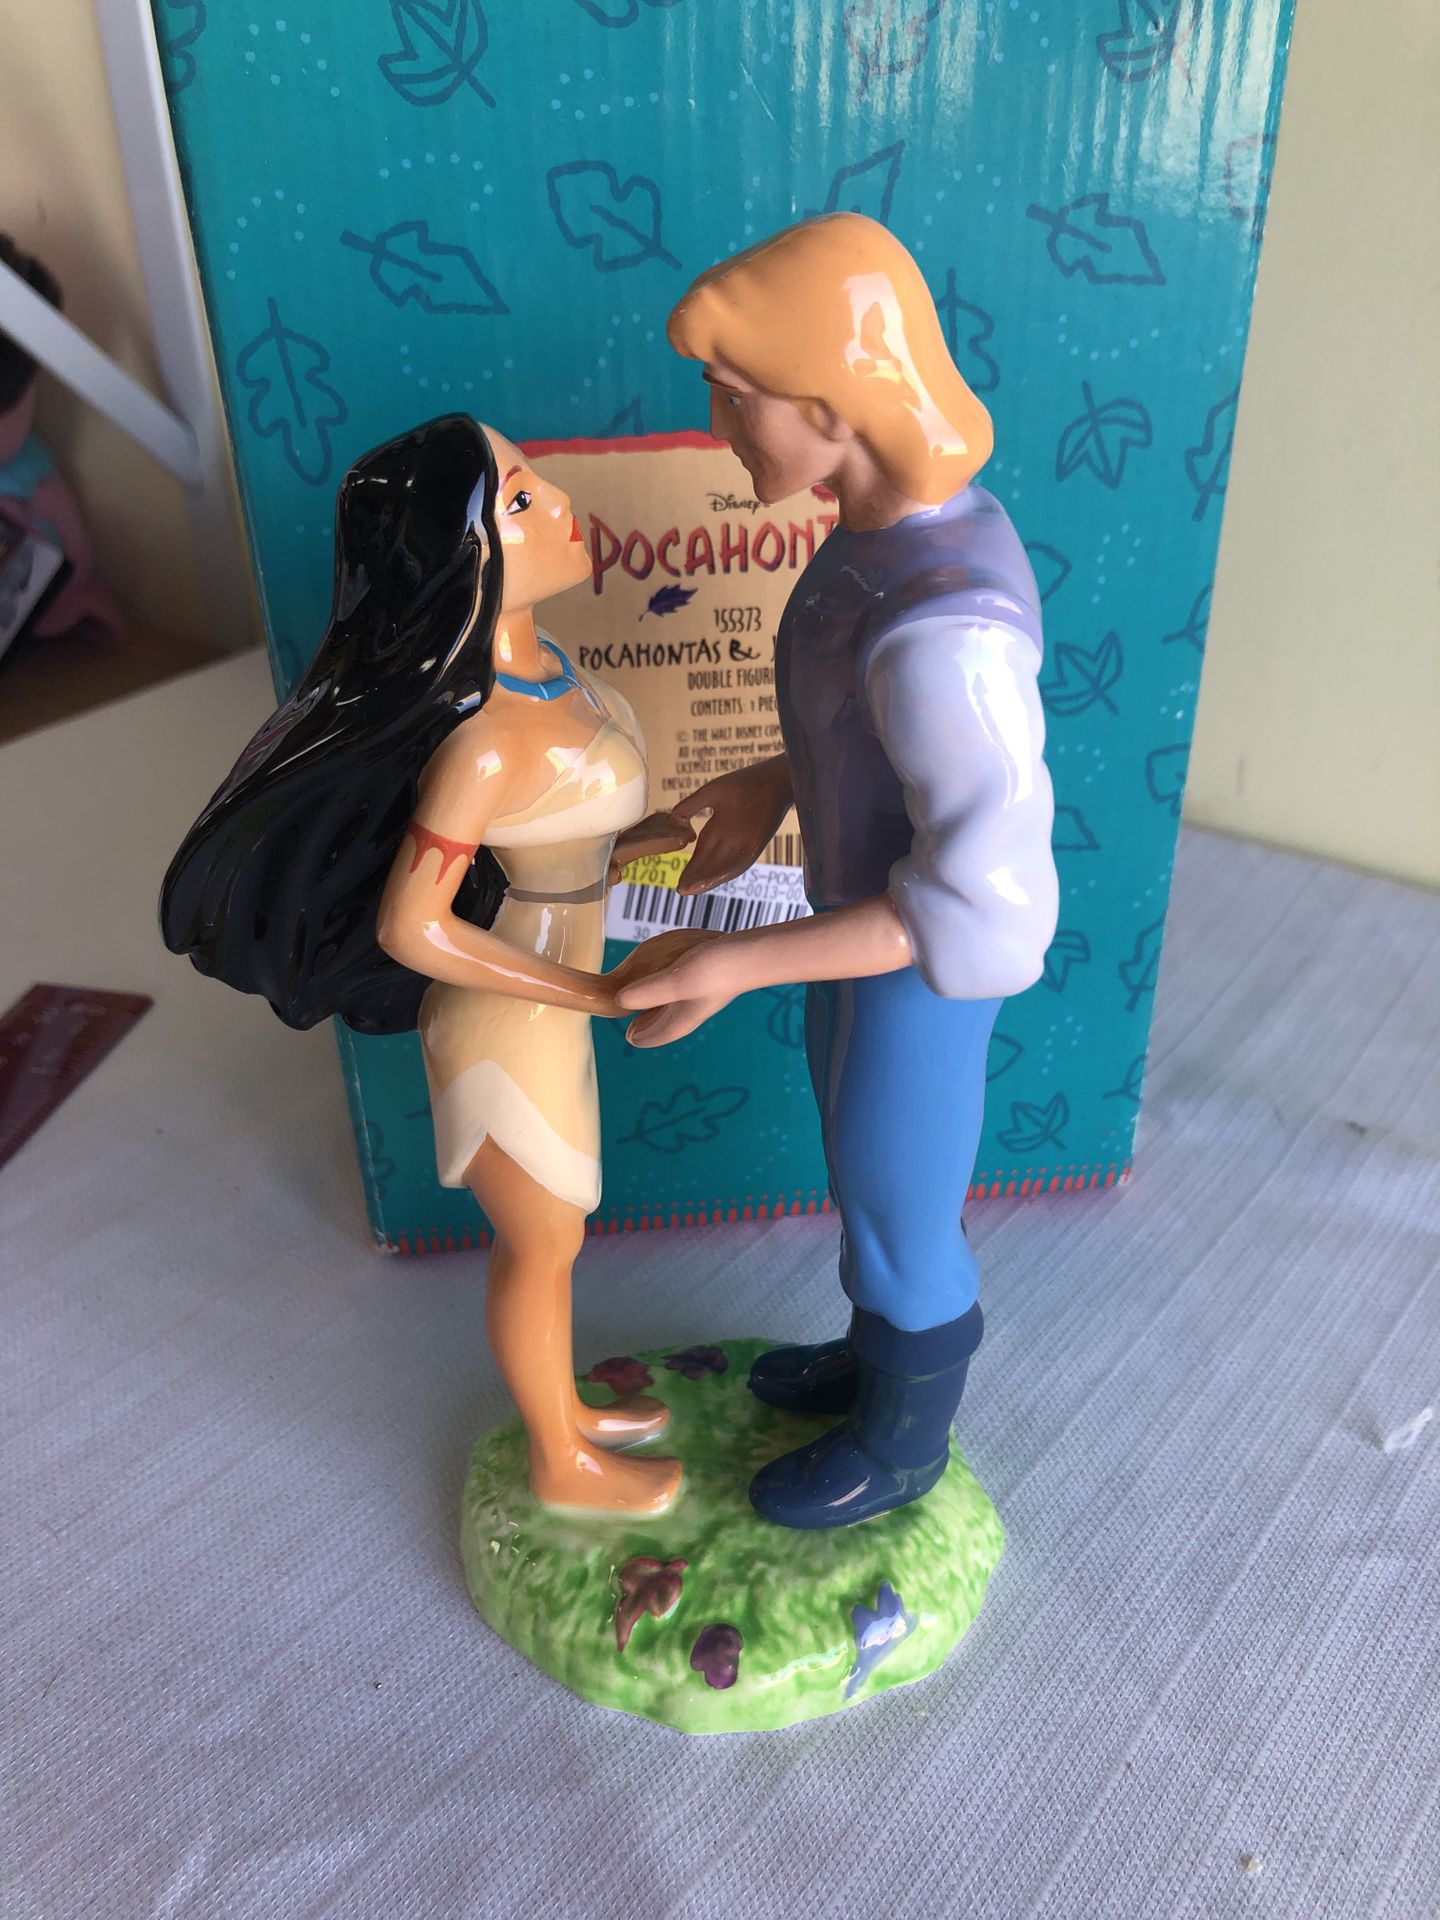 Disney’s Pocahontas figurine